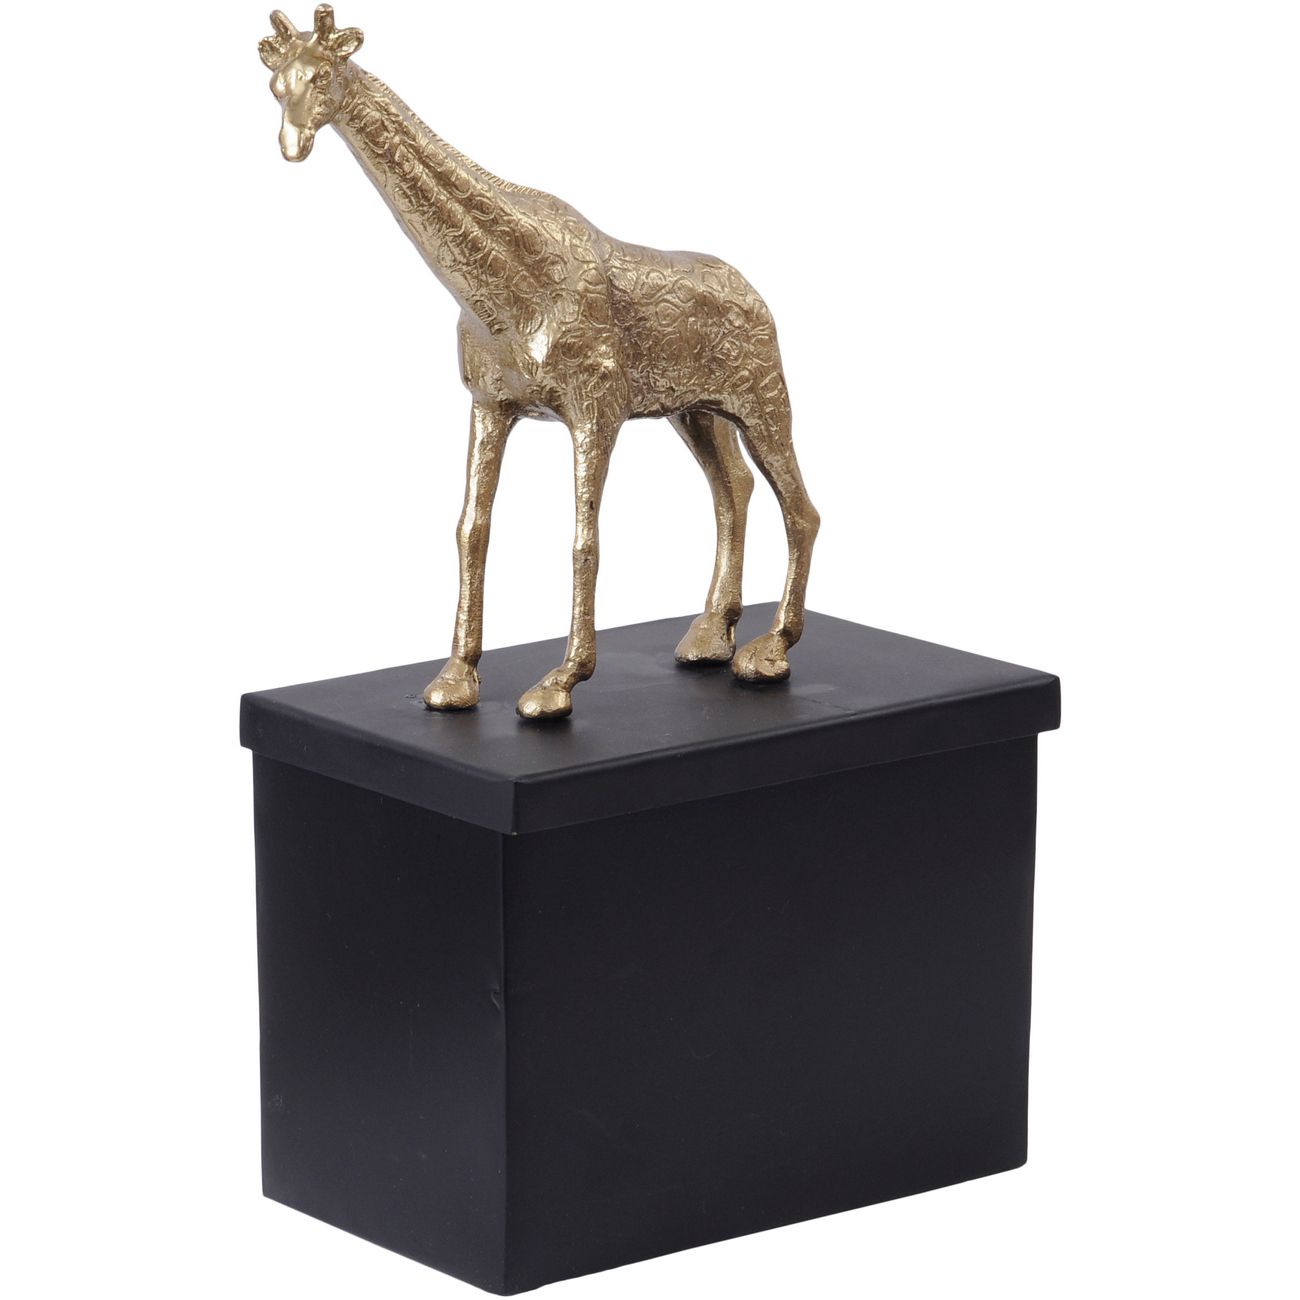 The Libra Company Giraffe Tin